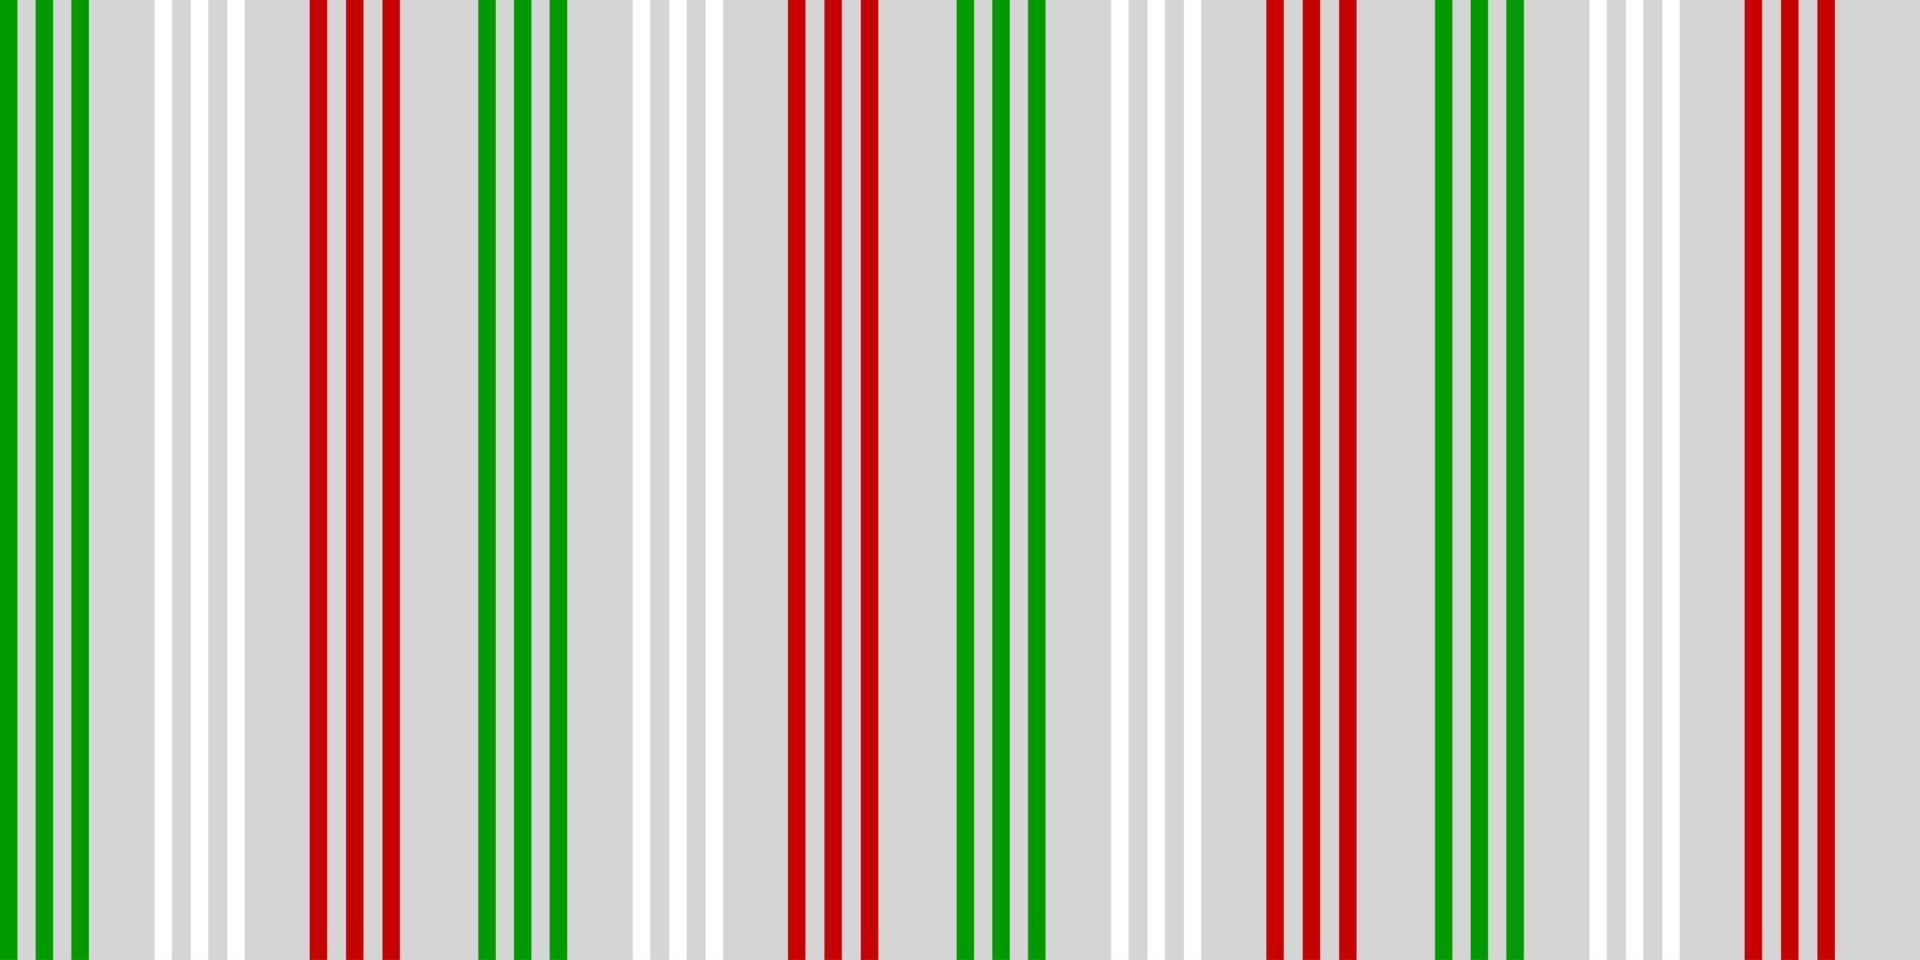 vector patroon verticale streep ontwerp. groene, rode en witte kleur. papier, doek, stof, doek, tafelkleed, servet, hoes, beddruk of wikkelgebruik. kerstdag en gelukkig nieuwjaar concept.